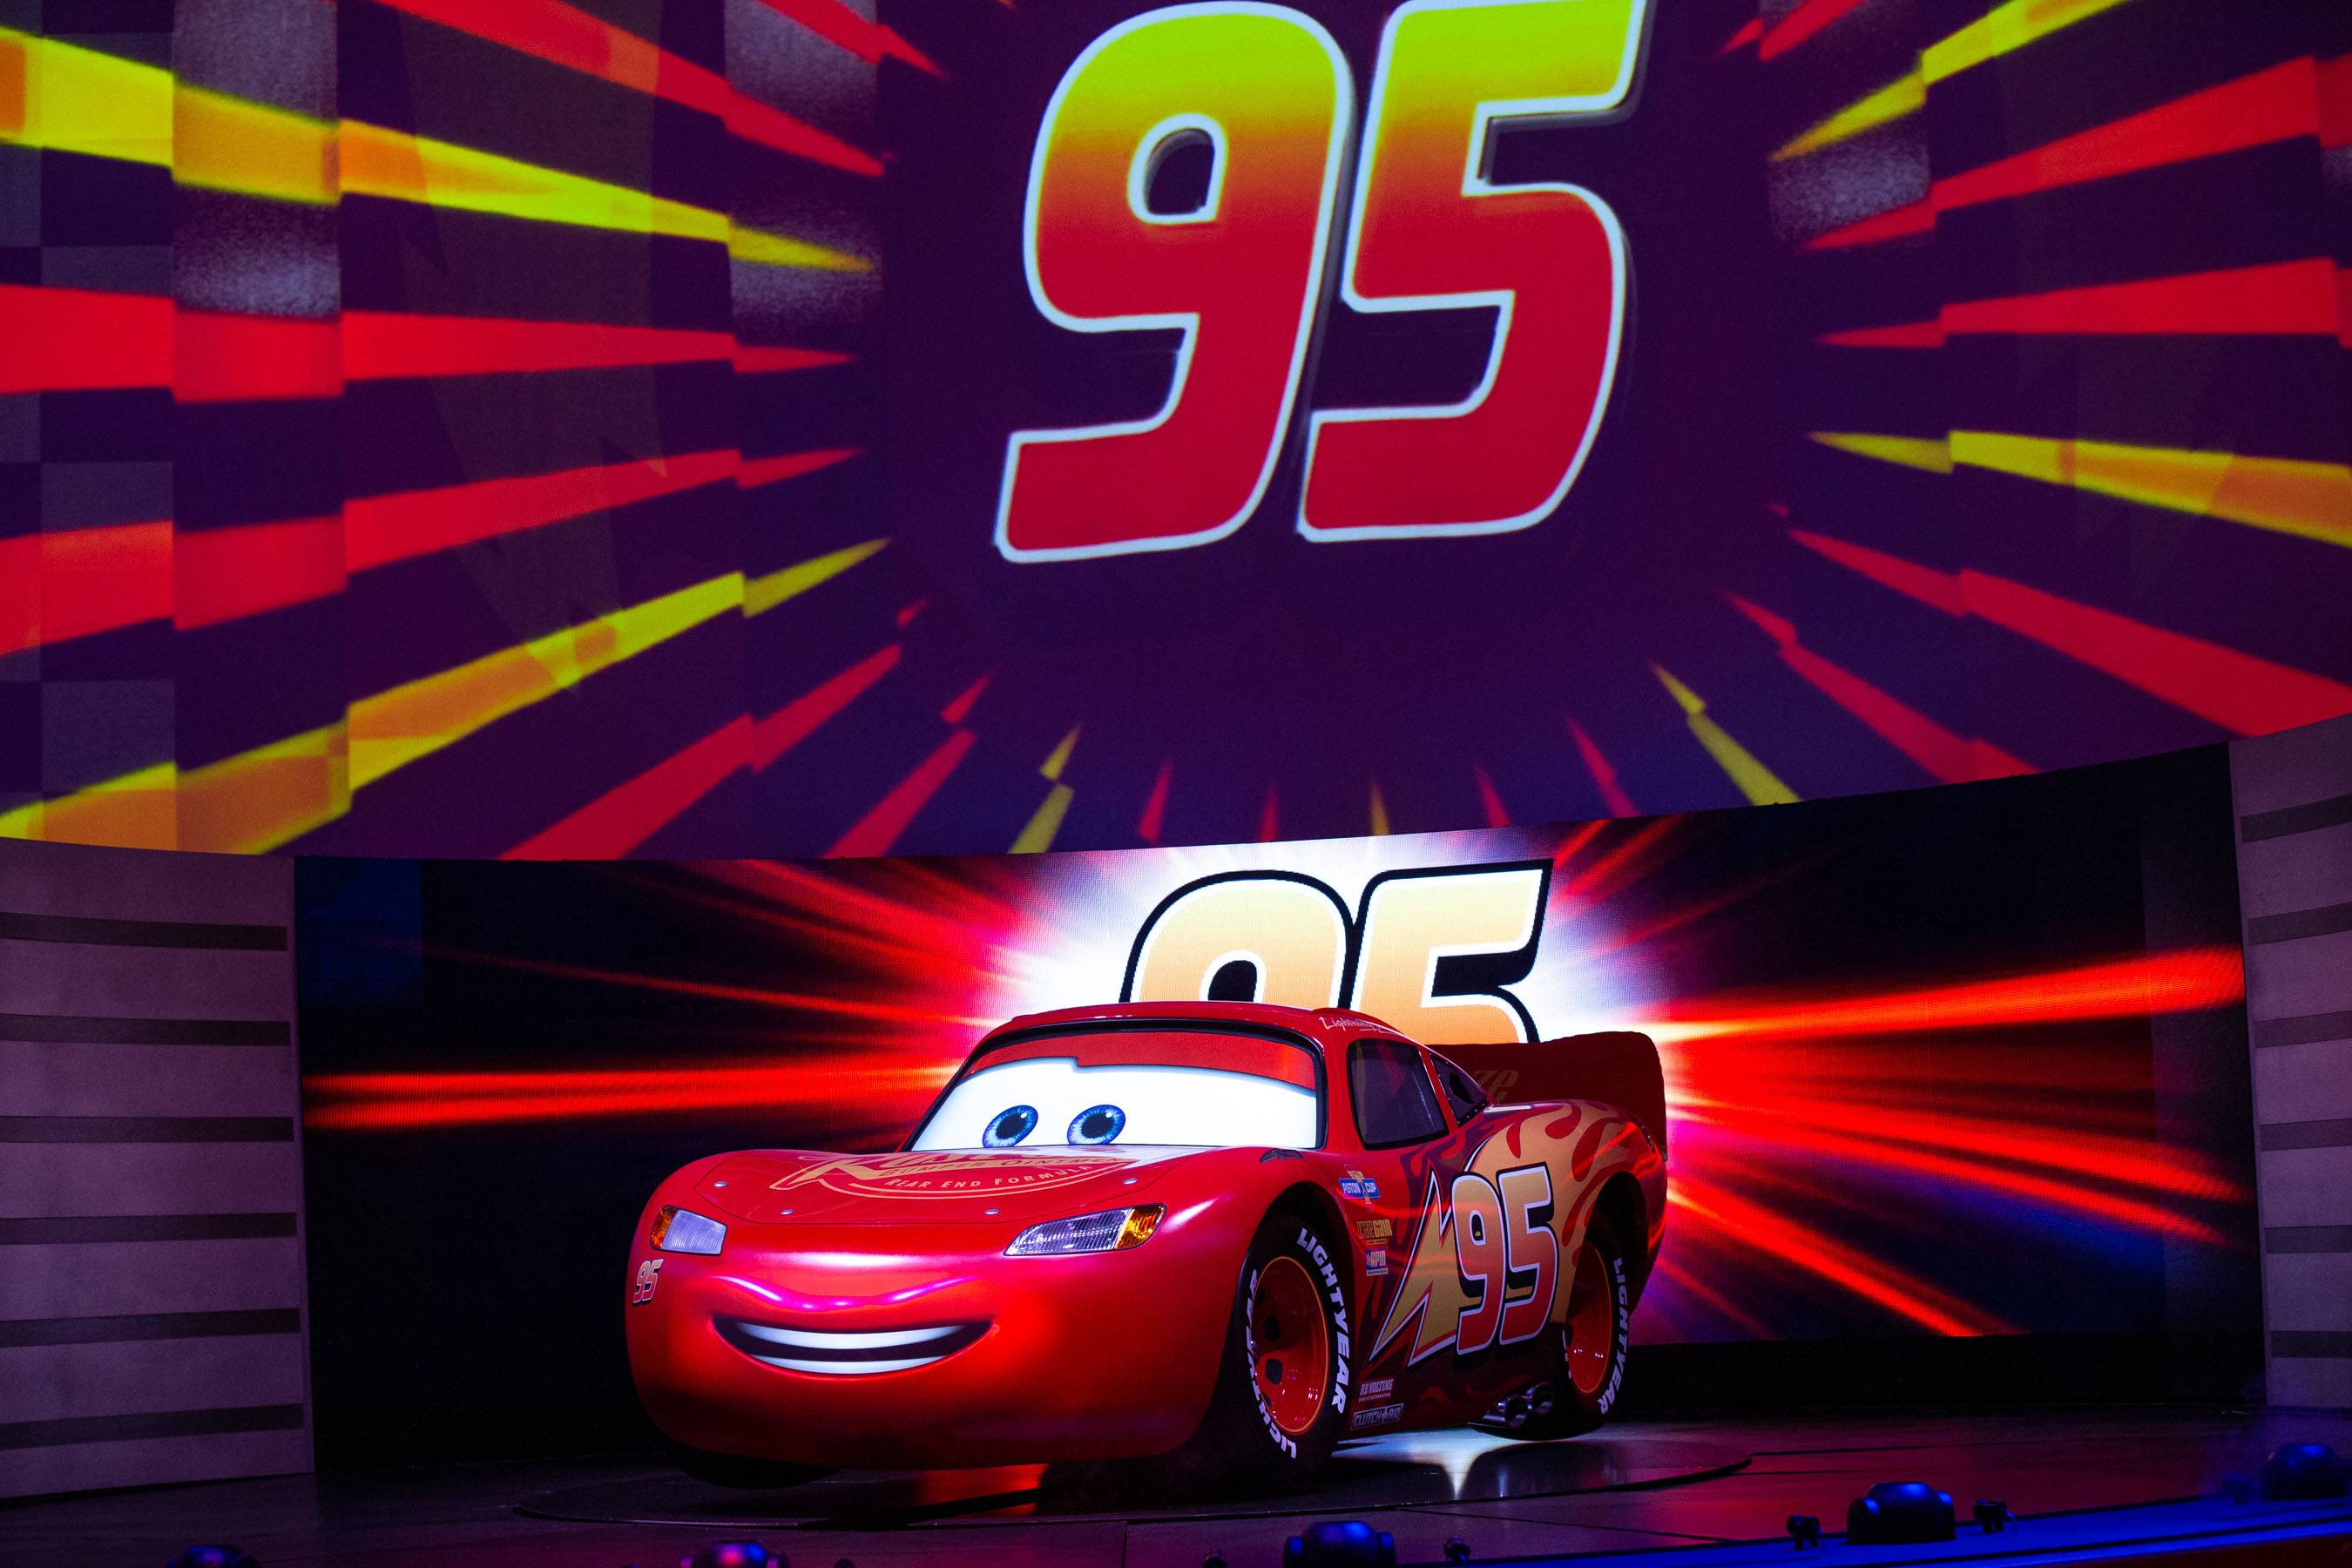 VIDEO - First look at Lightning McQueen's Racing Academy